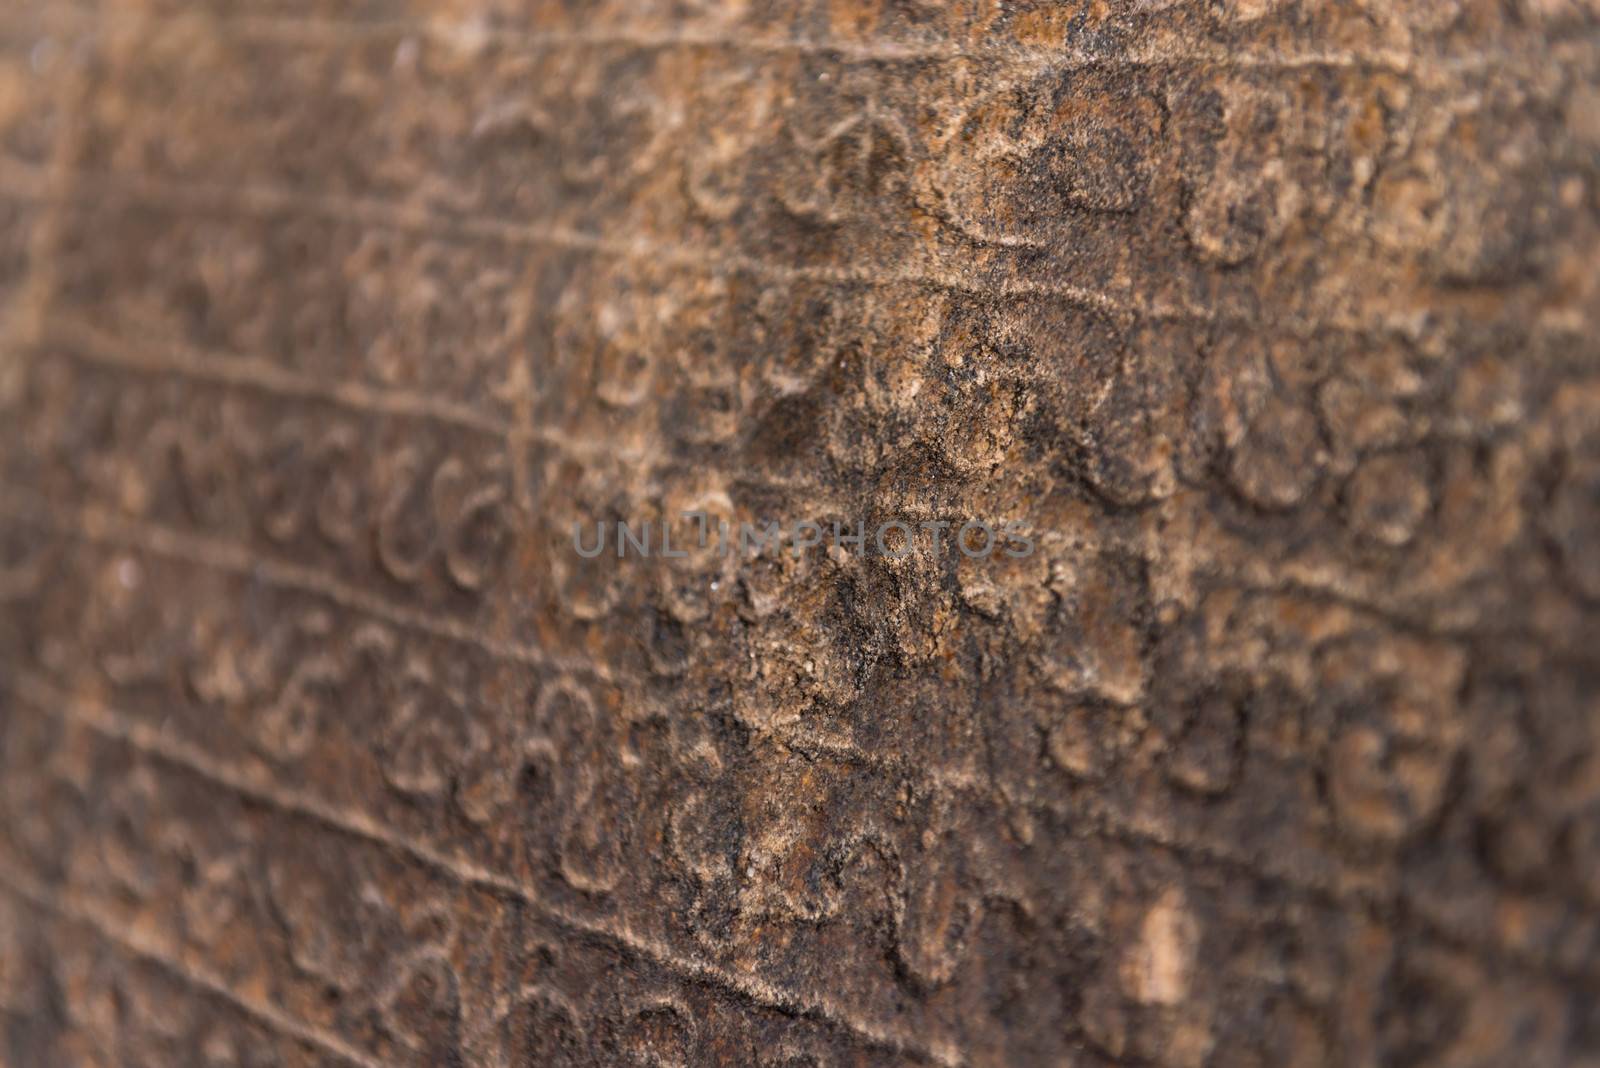 Ancient Sinhalese writing chiseled on stone, Dambulla, Sri Lanka 